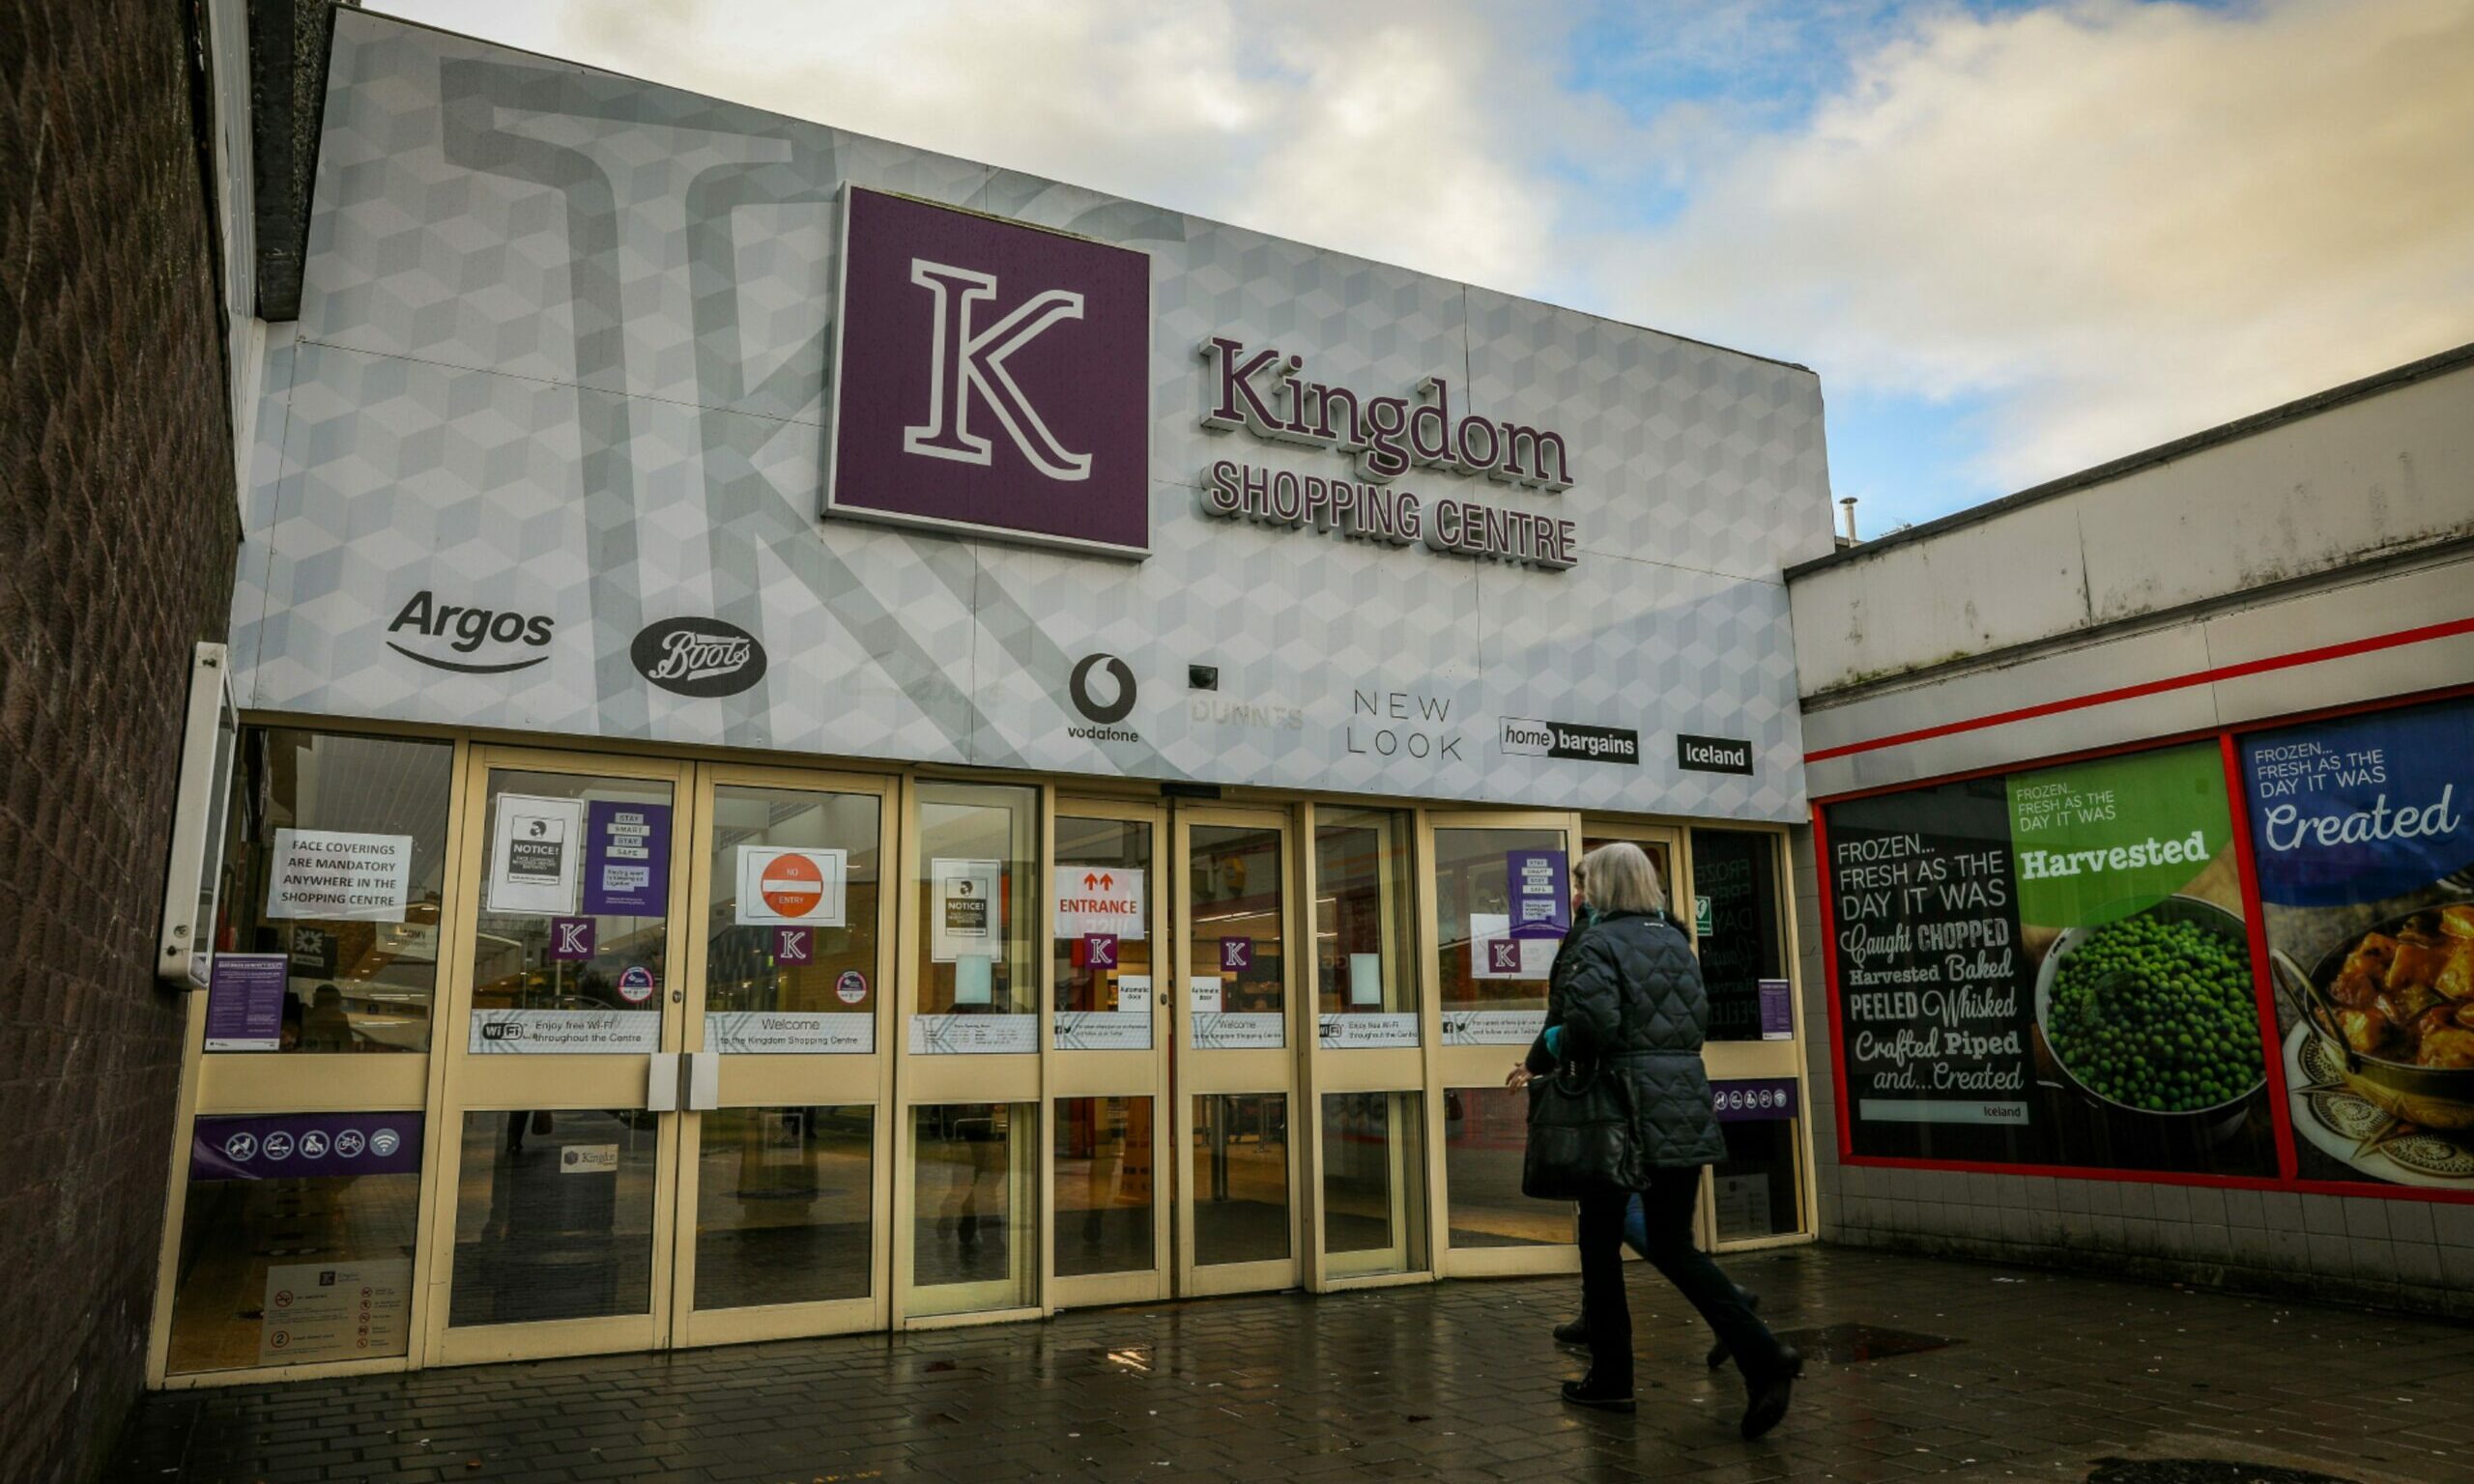 Kingdom Shopping Centre, Glenrothes